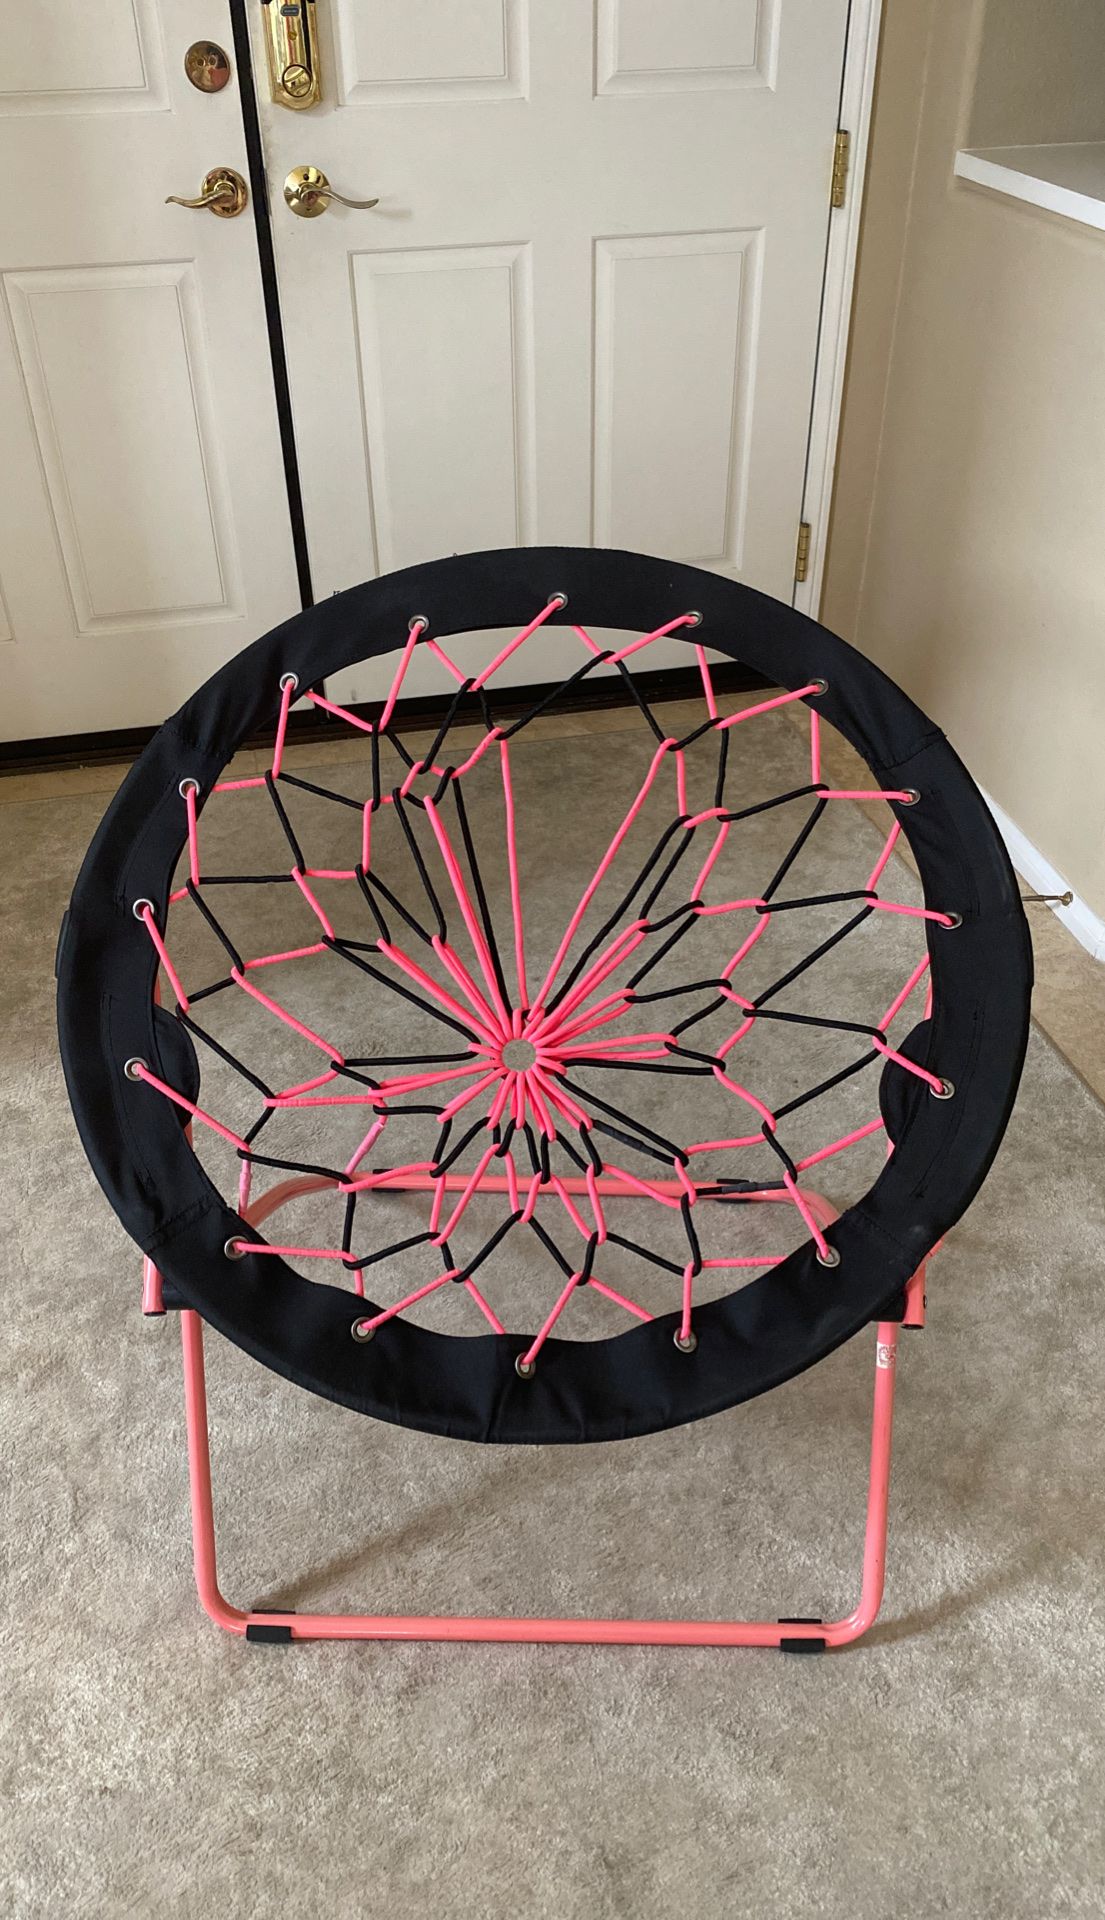 Bungee chair - folds flat